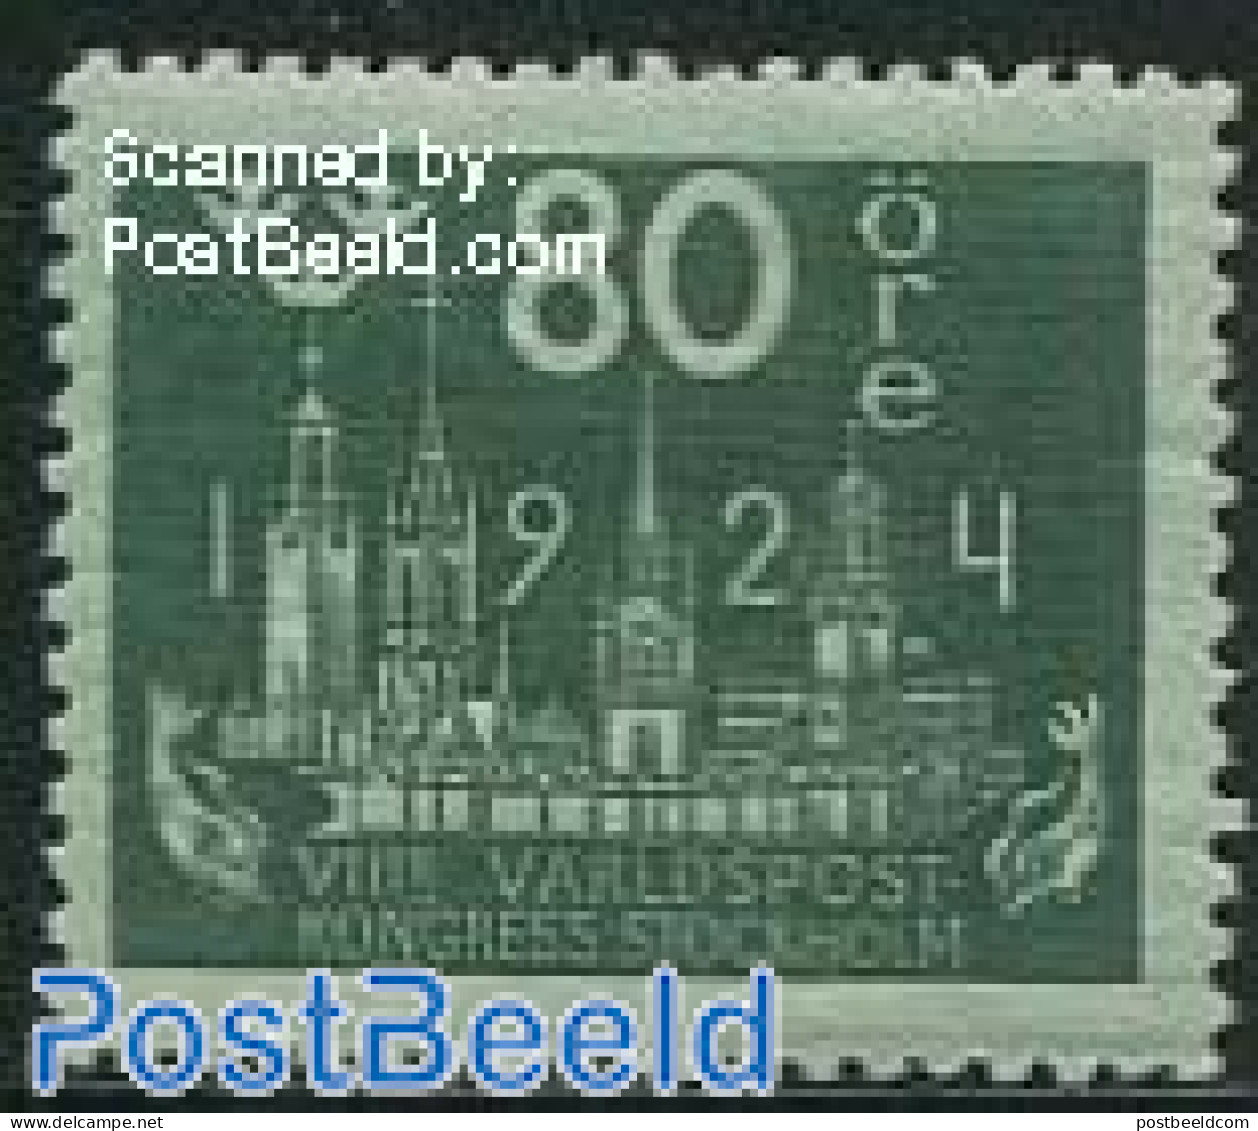 Sweden 1924 80o, Stamp Out Of Set, Unused (hinged) - Ongebruikt